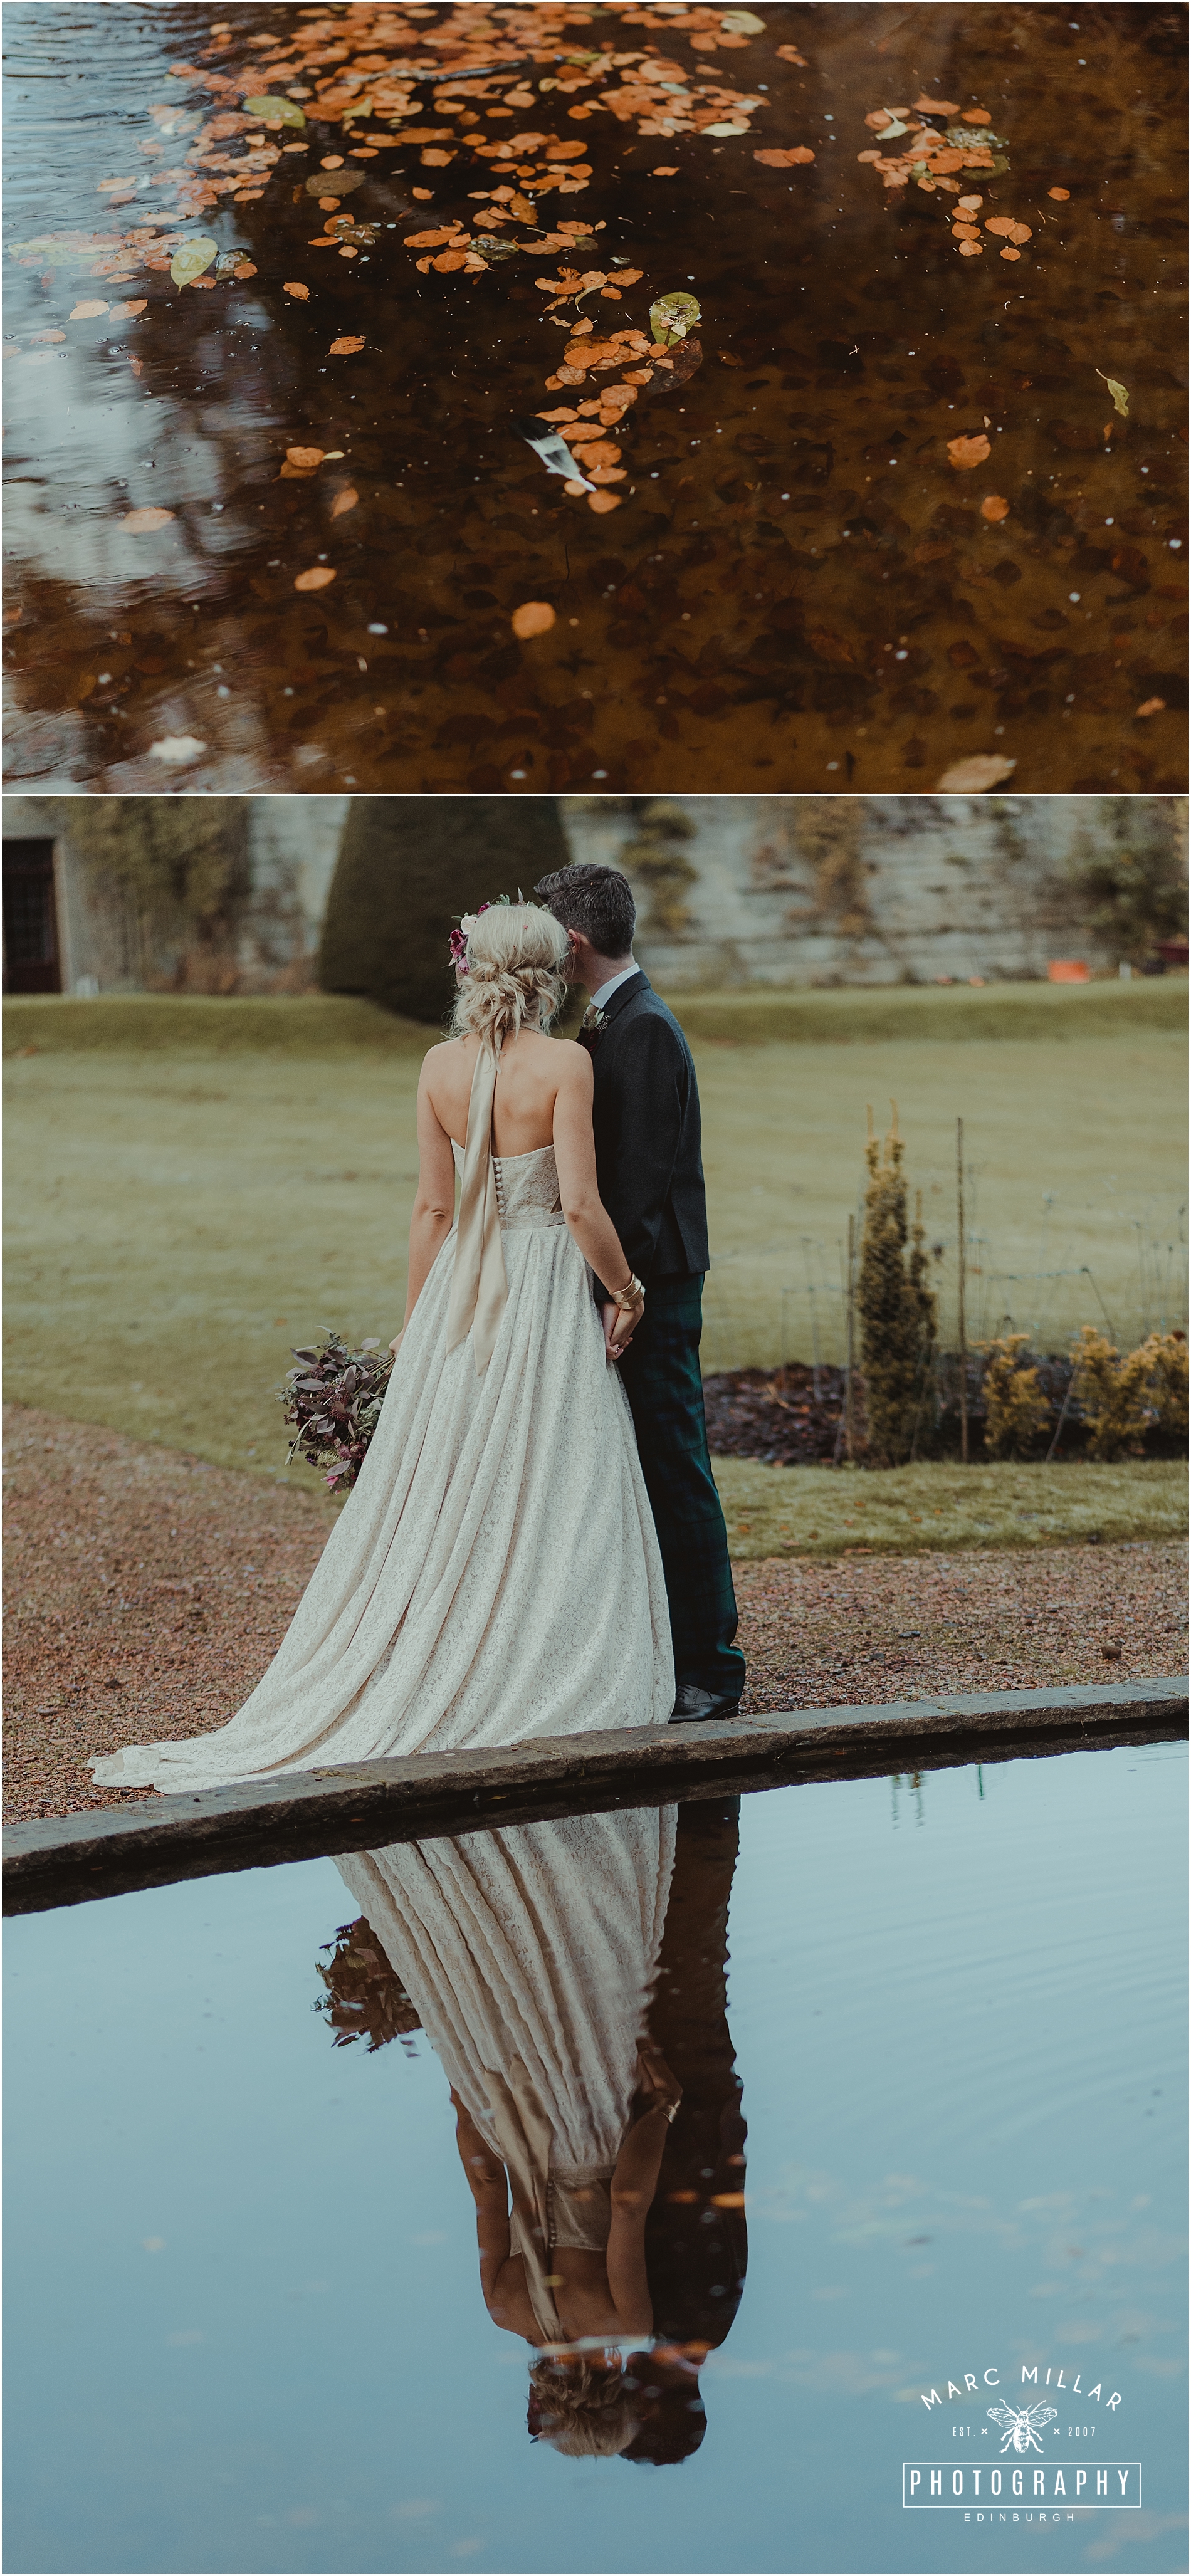  Kirknewton Stables Wedding Photography by Marc Millar Photography 